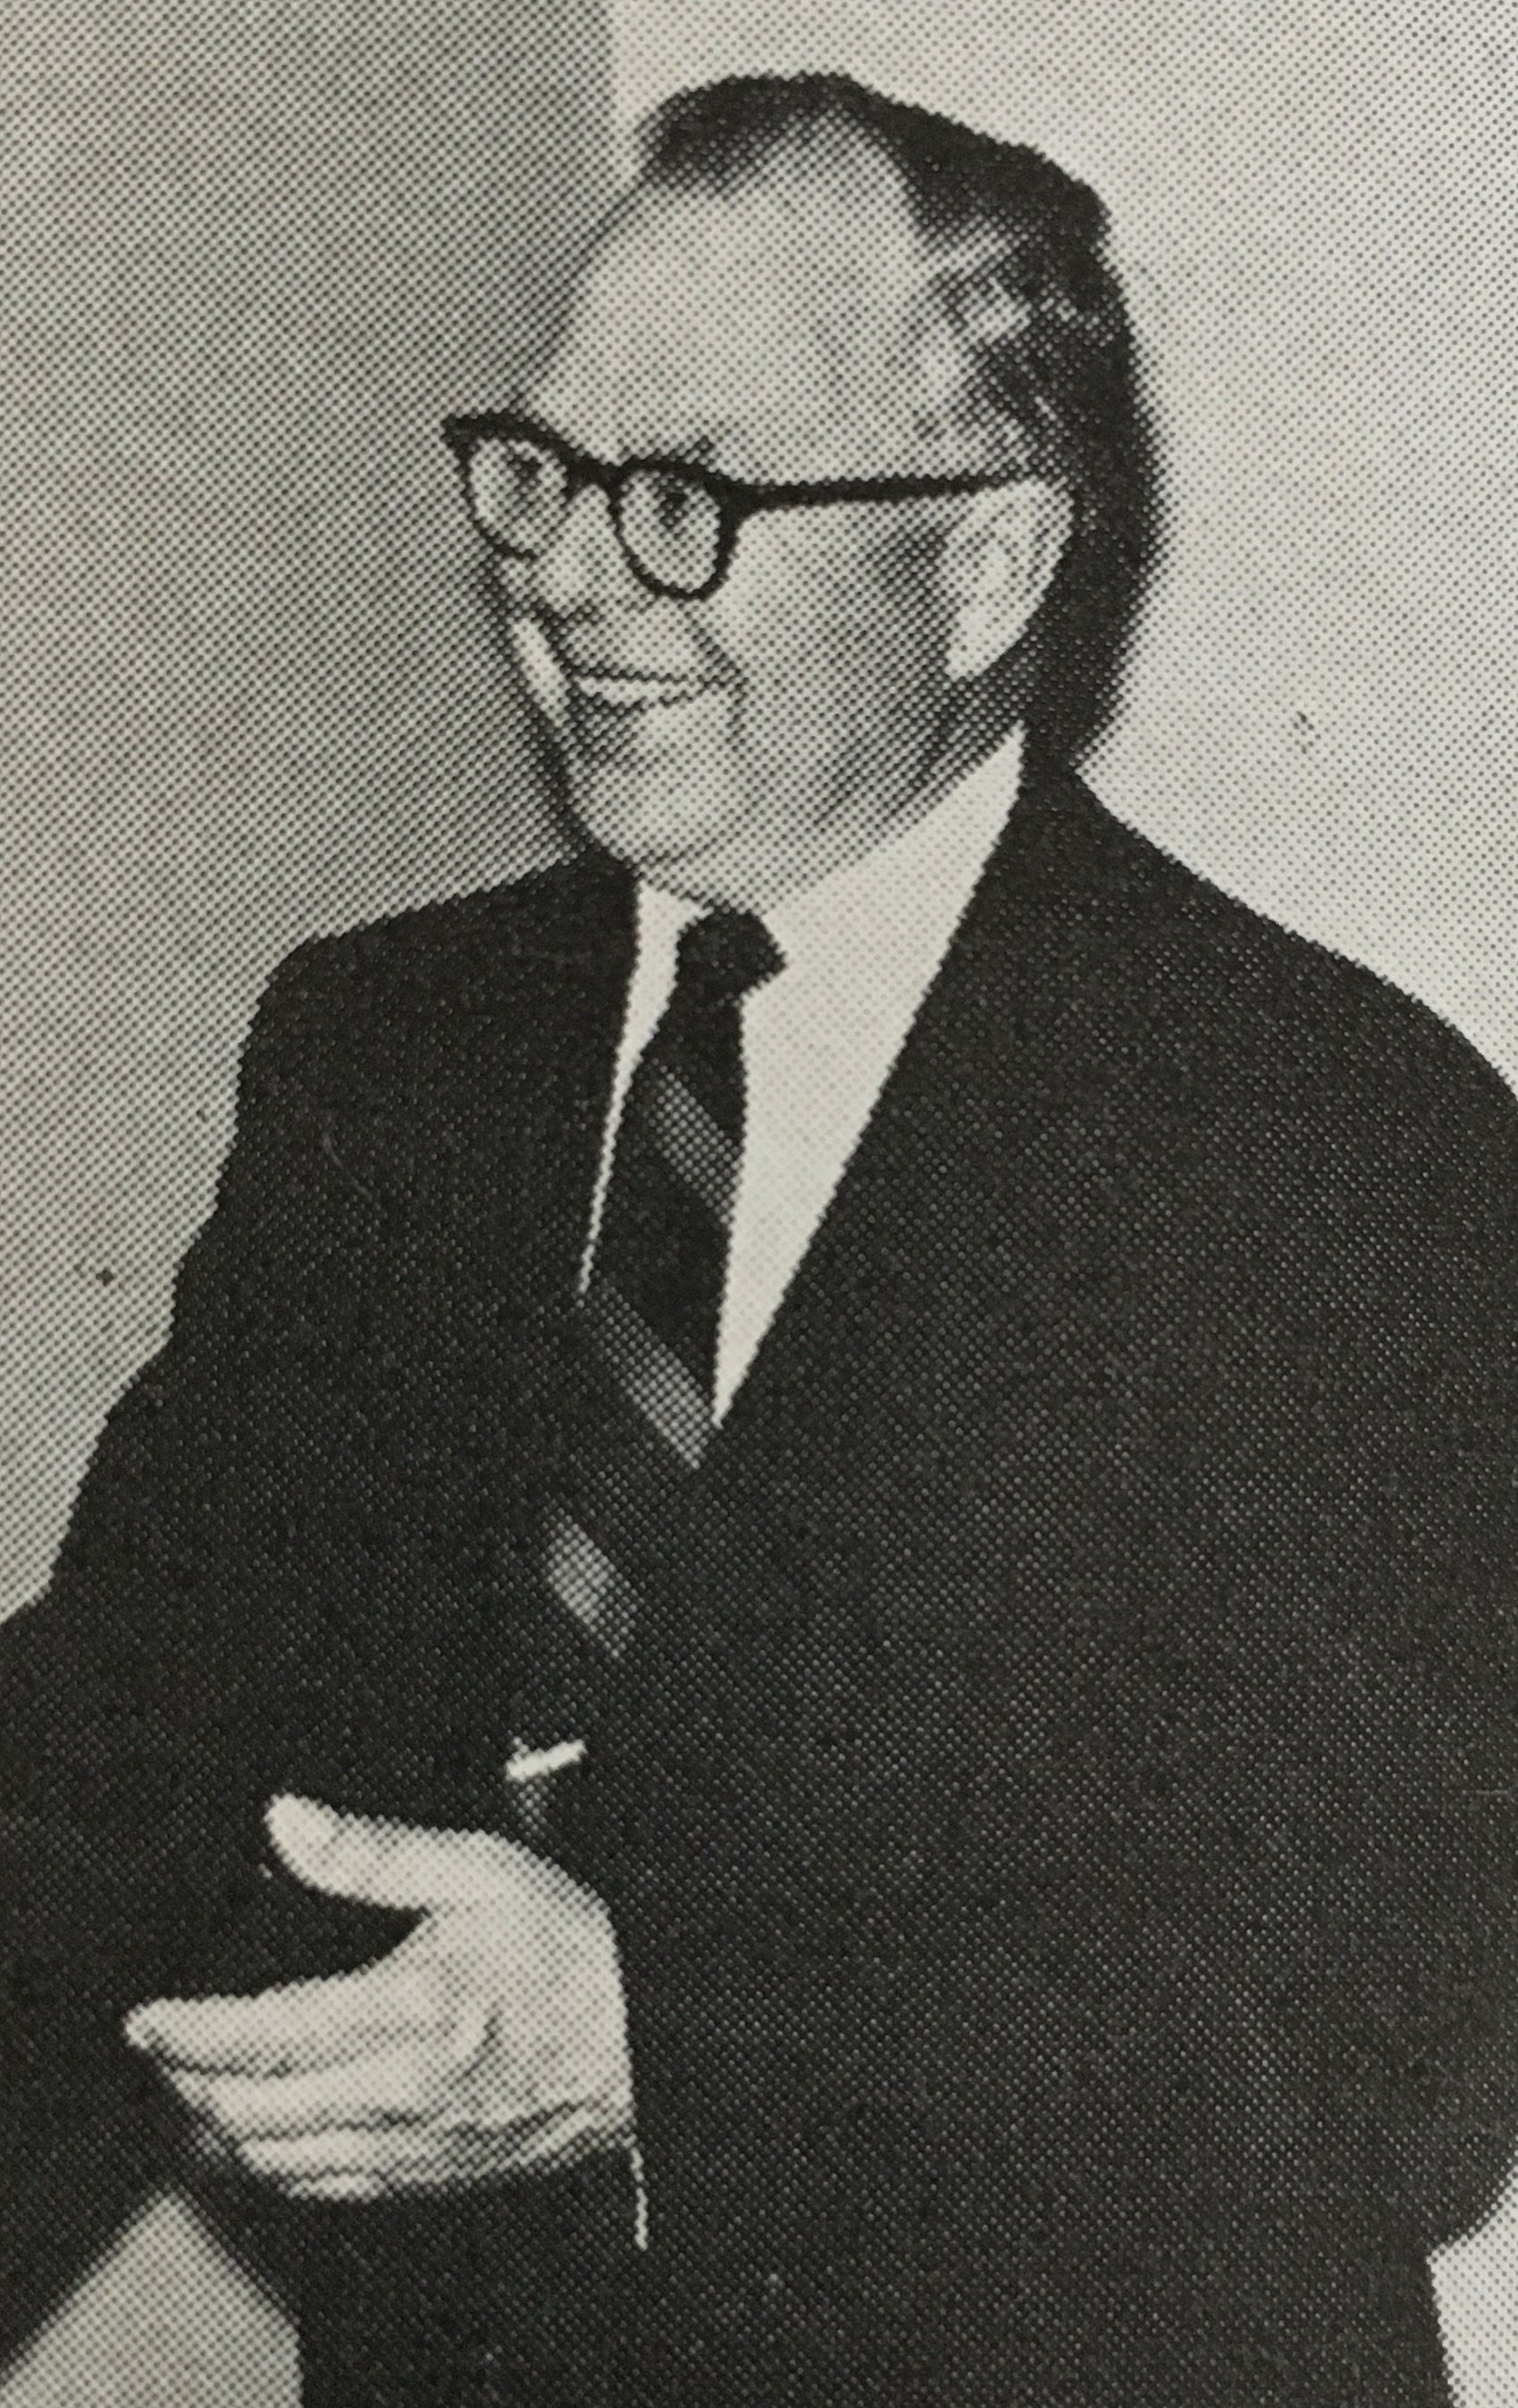 Harold Peterson